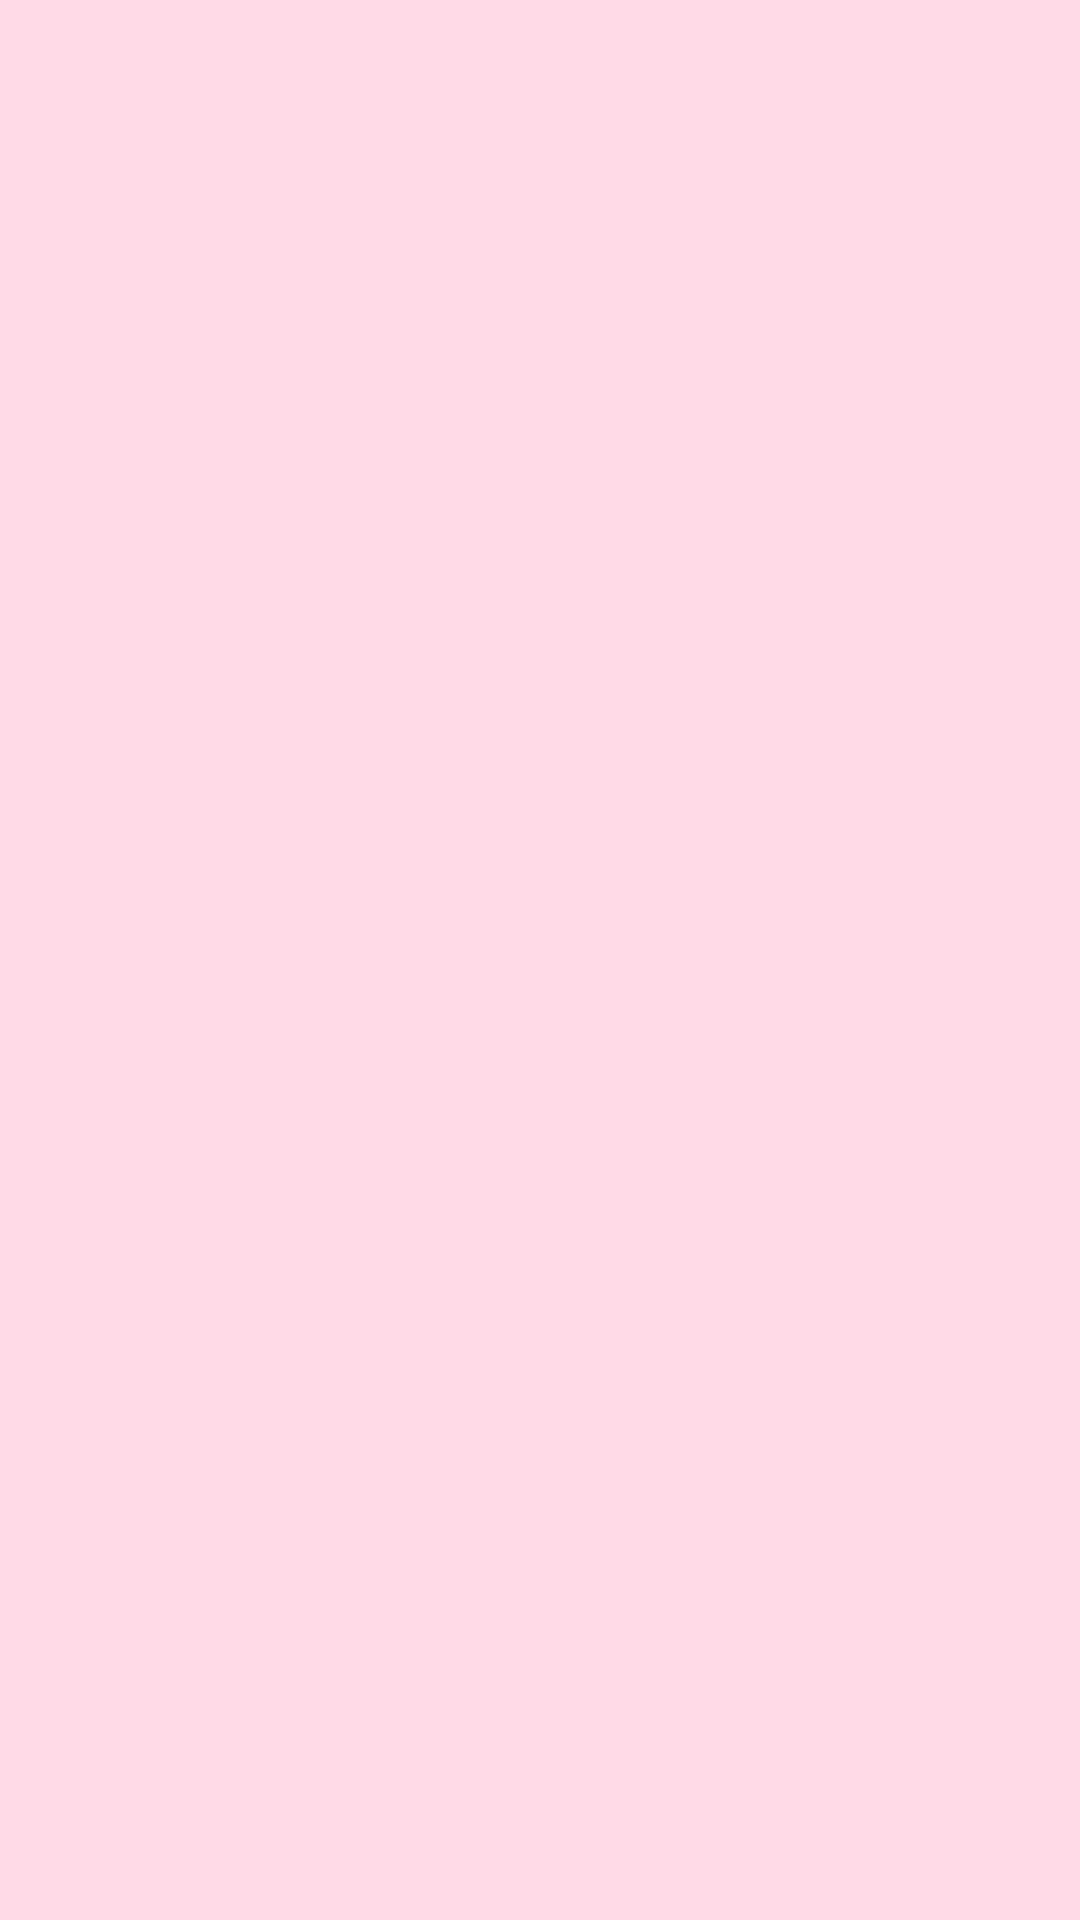 Cute Plain Pink Wallpaper